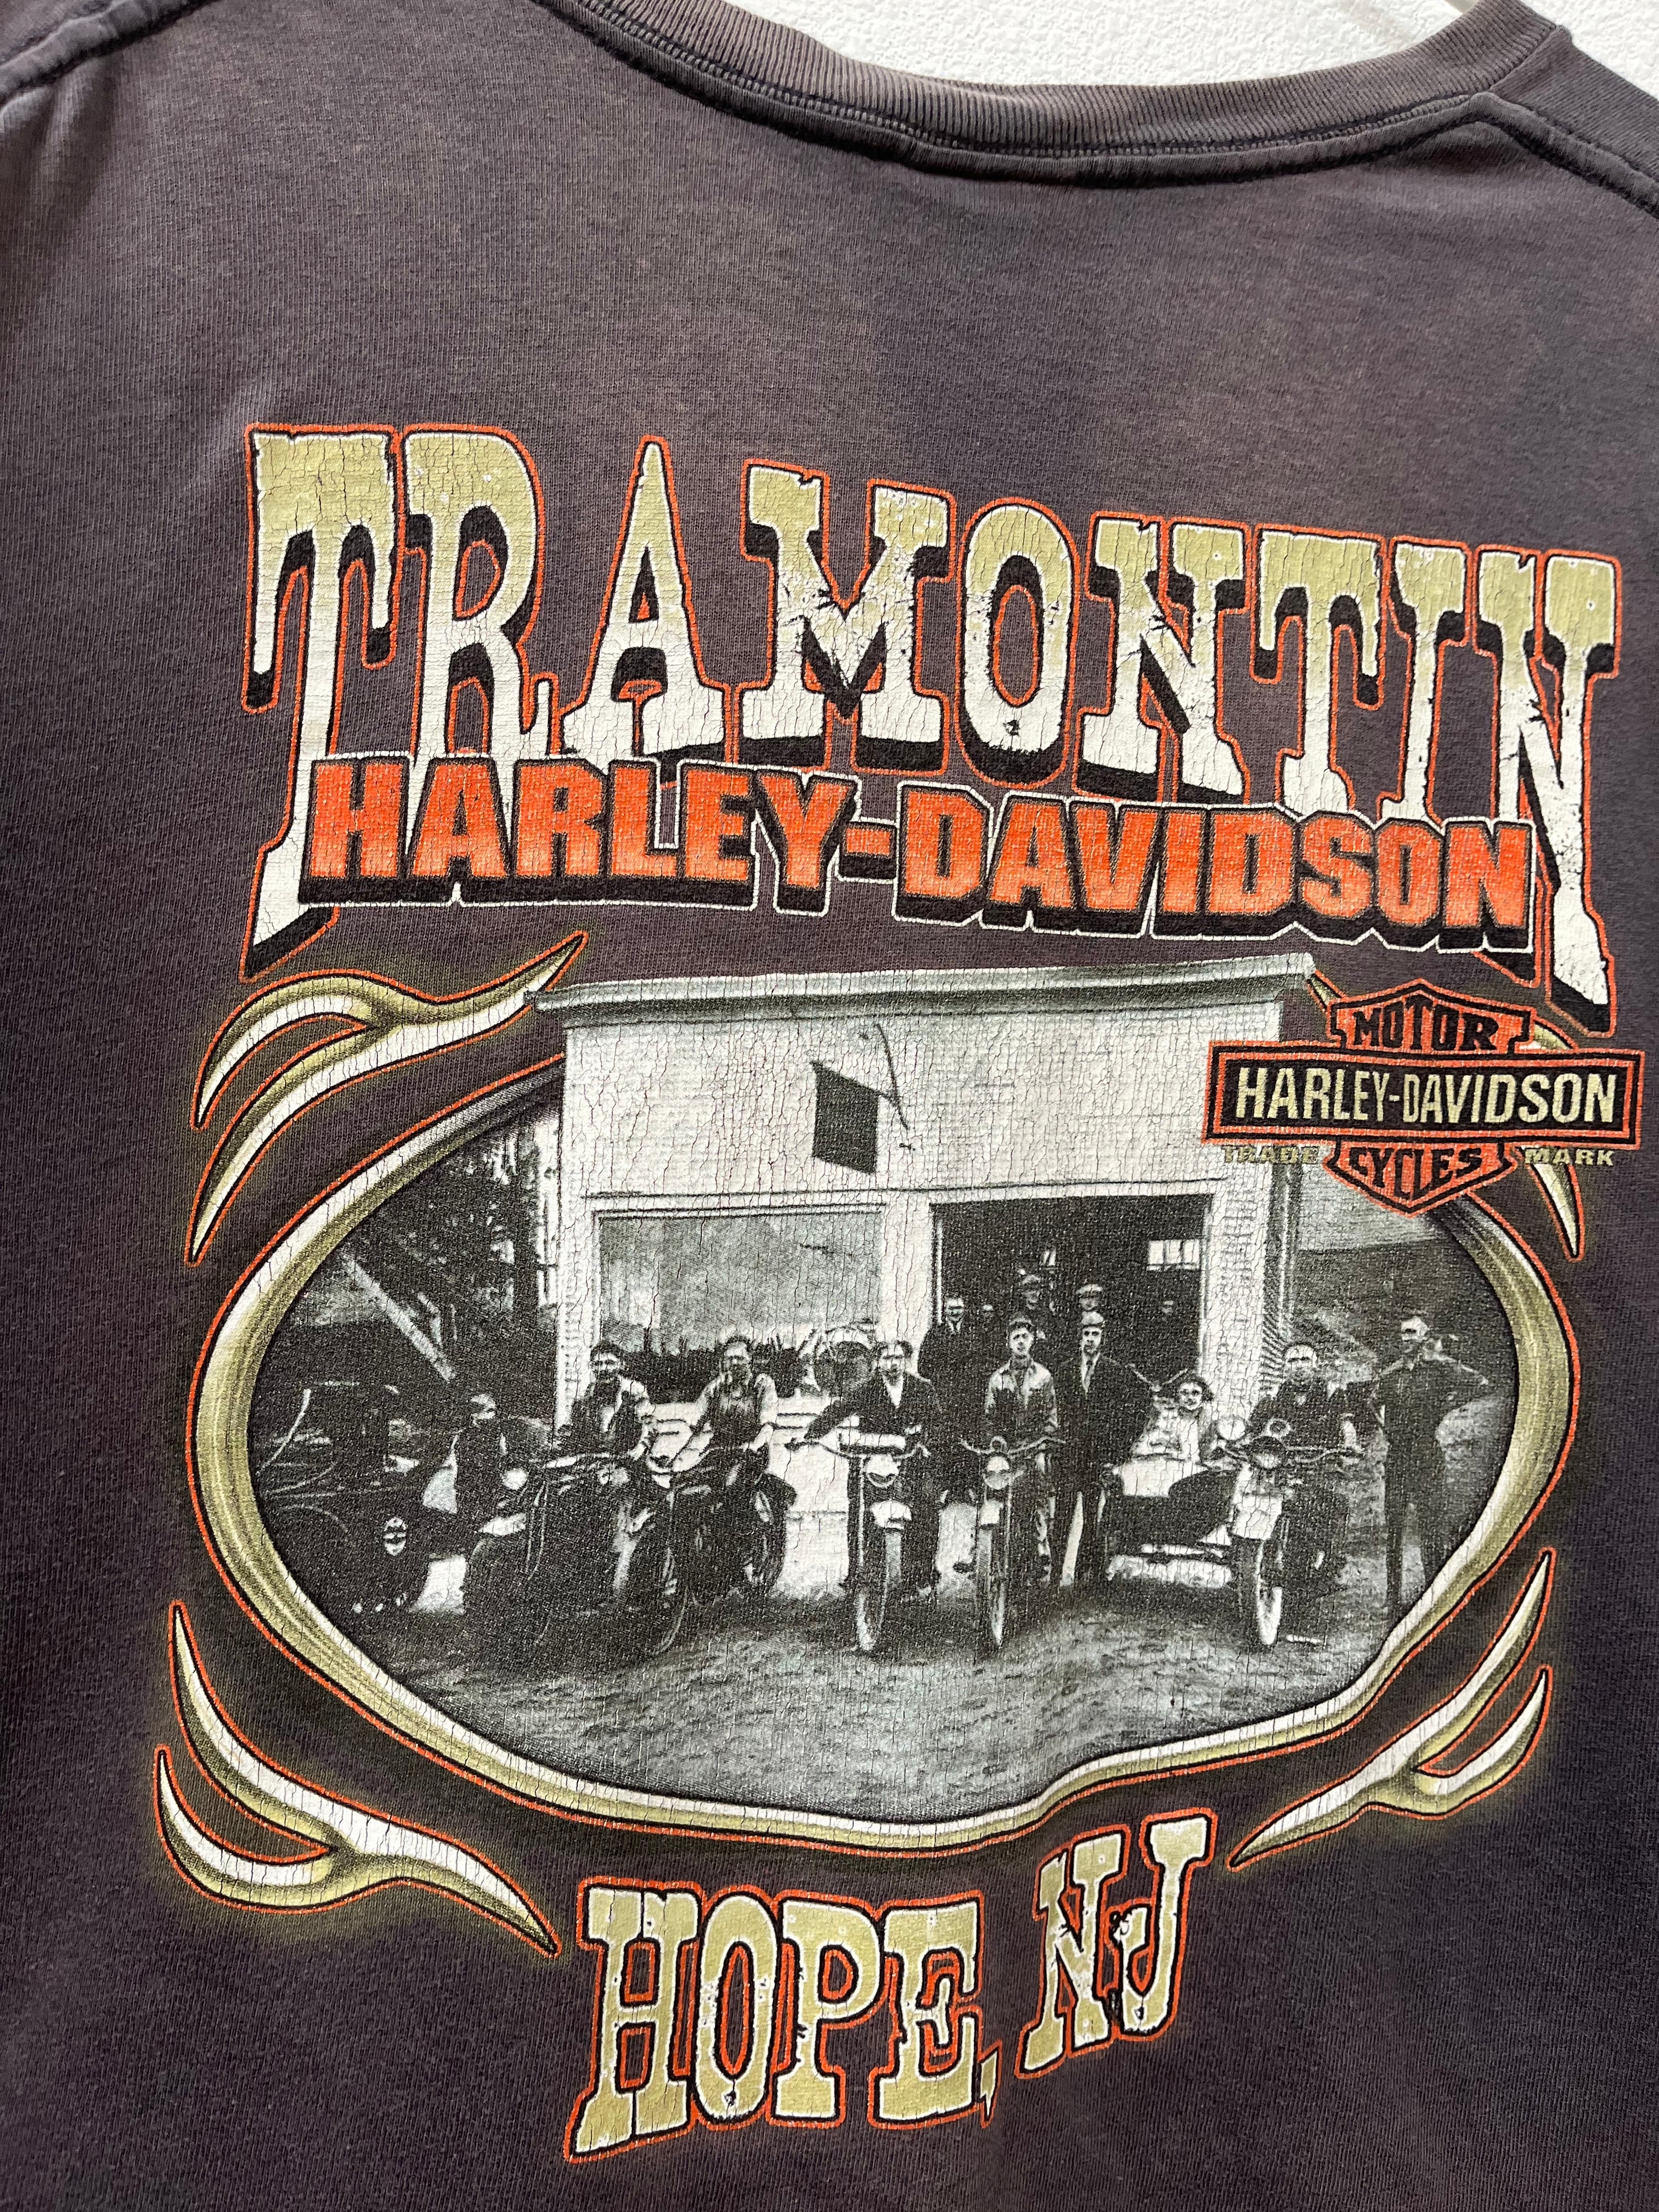 Vintage Harley Davidson Tee